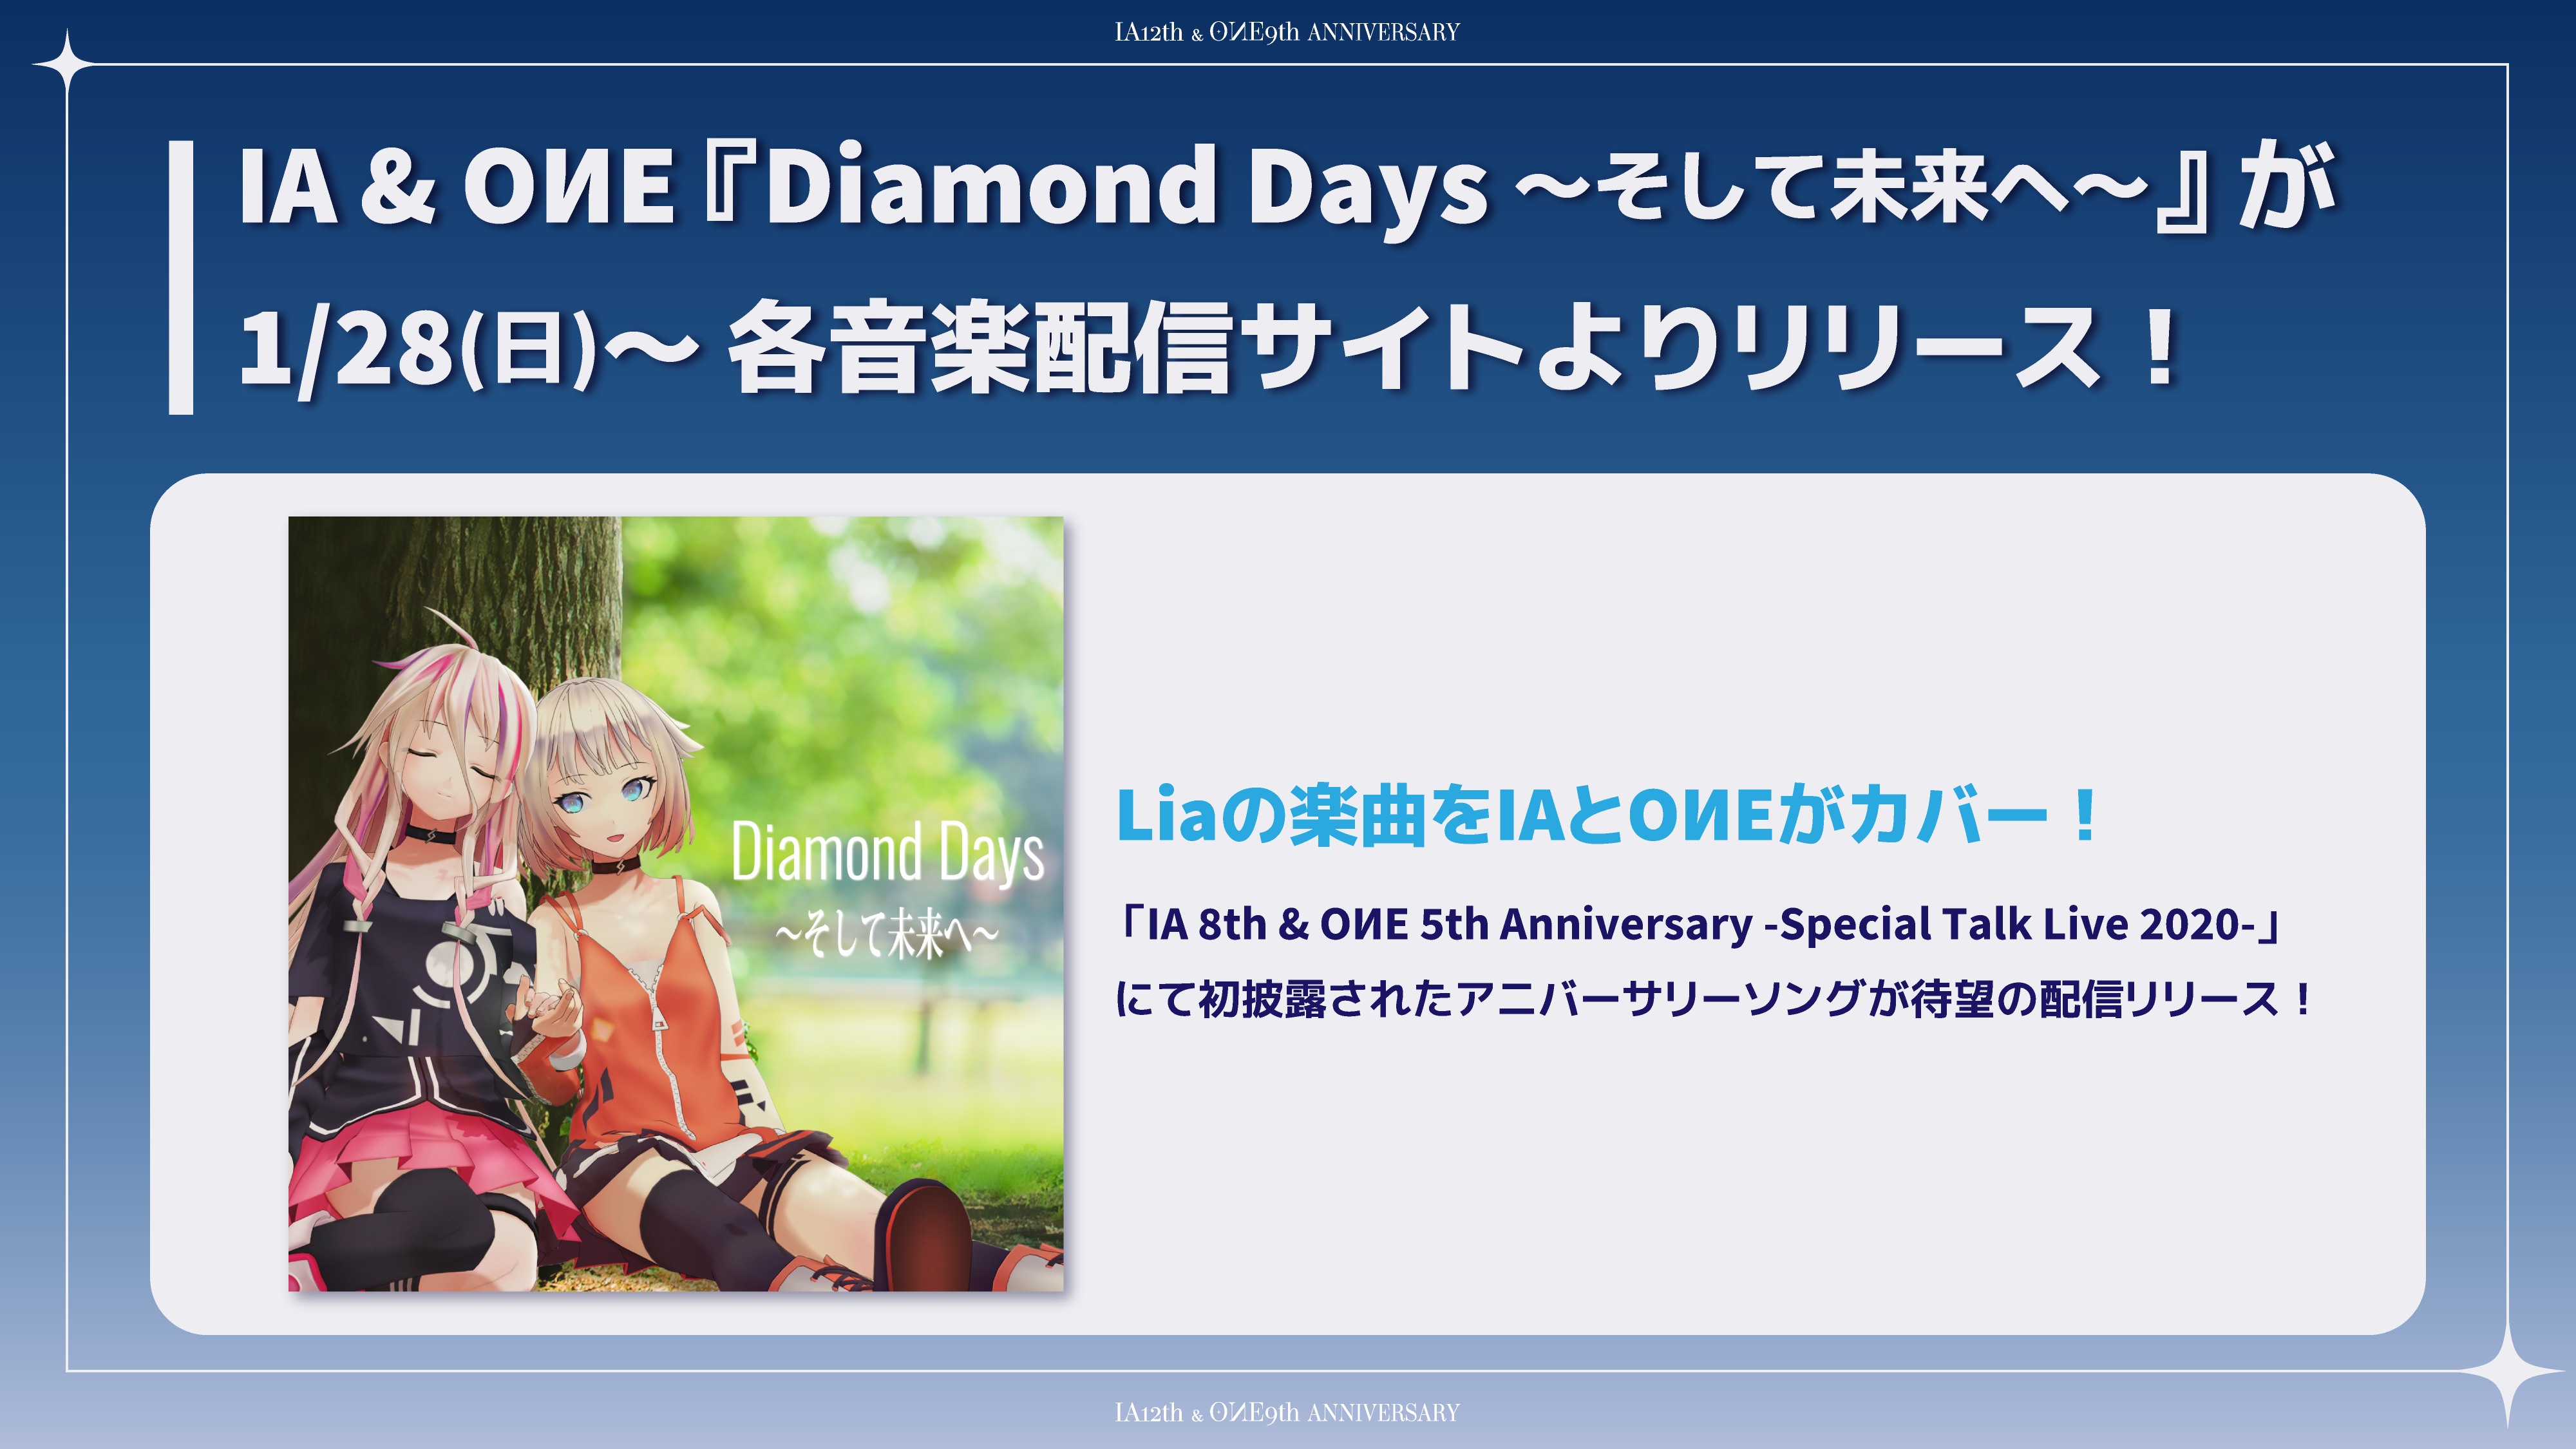 【RELEASE INFO】明日1/28(日)各音楽配信サイトで、待望の最新配信シングル「Diamond Days ～そして未来へ～」リリース!!